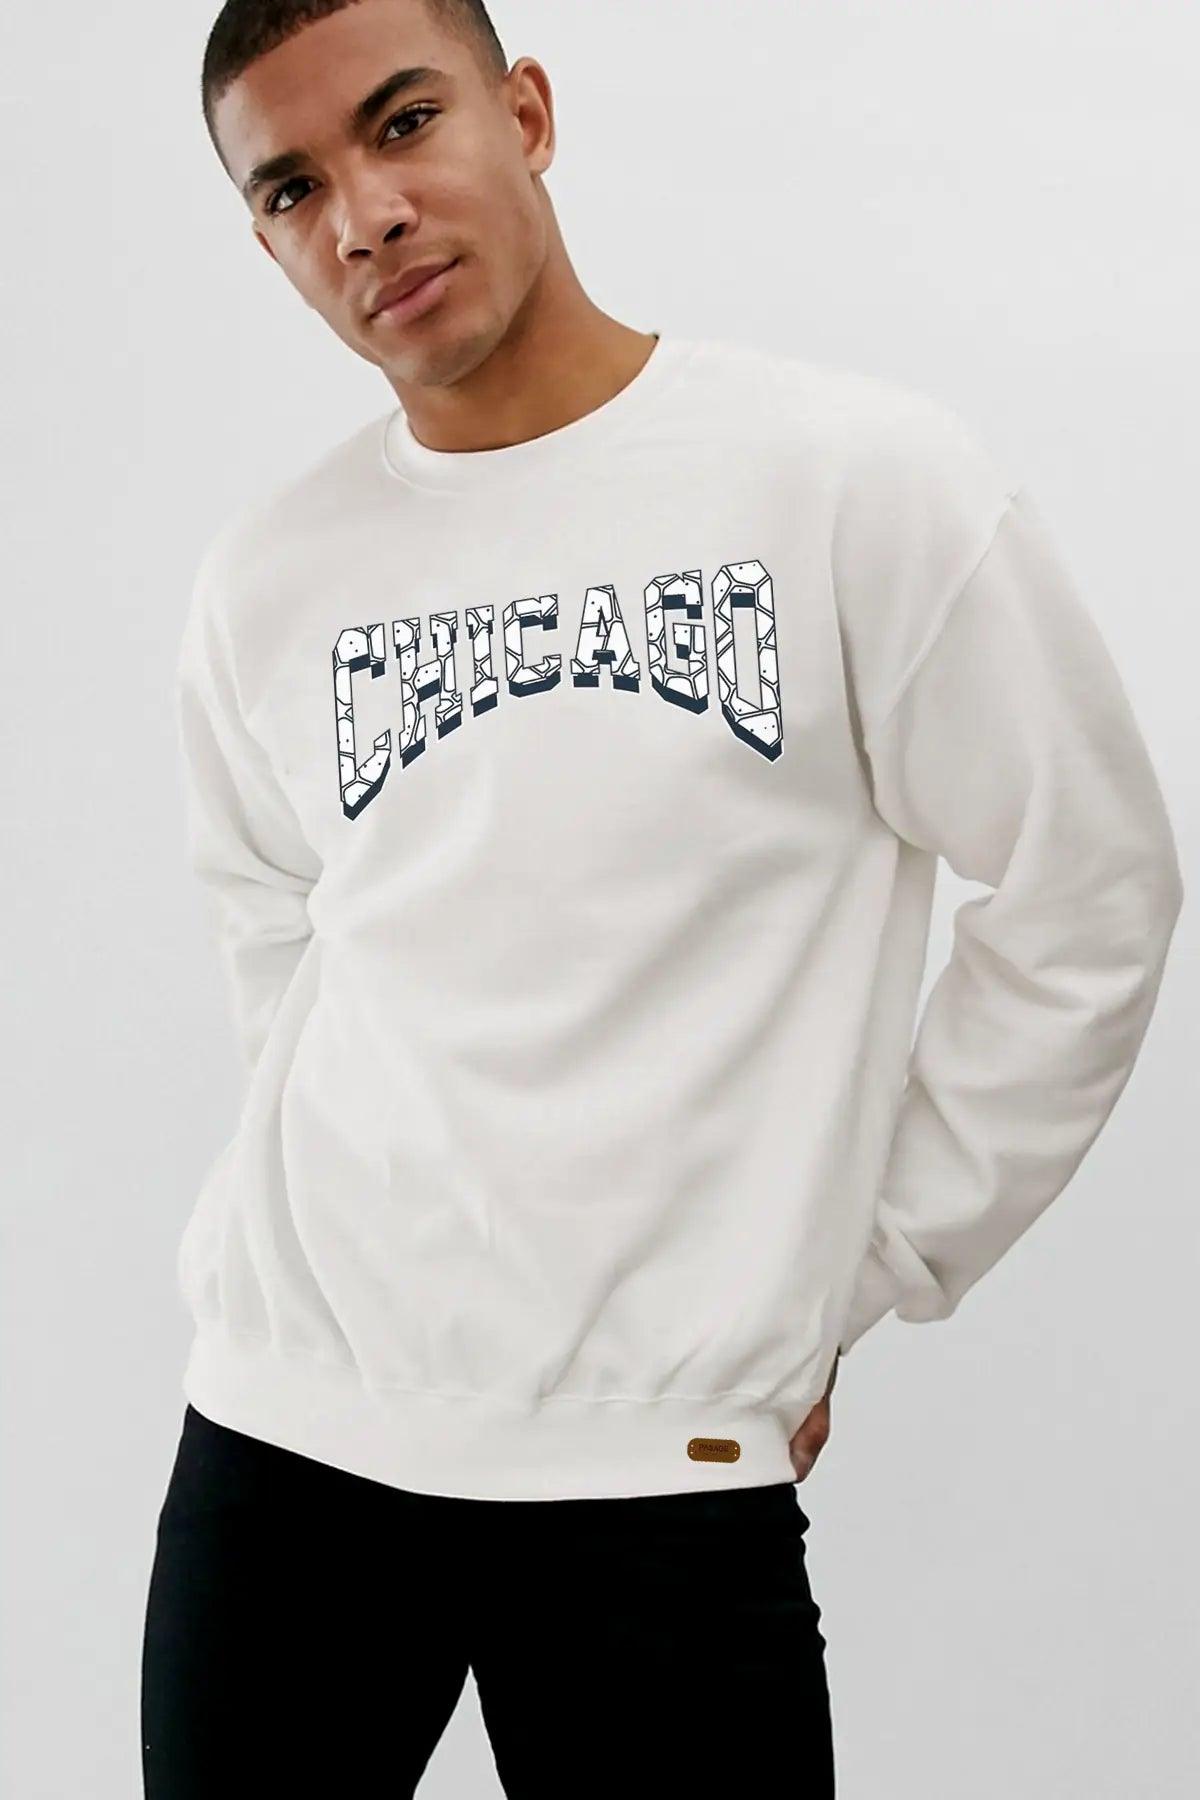 Chicago City Oversize Erkek Sweatshirt - PΛSΛGE